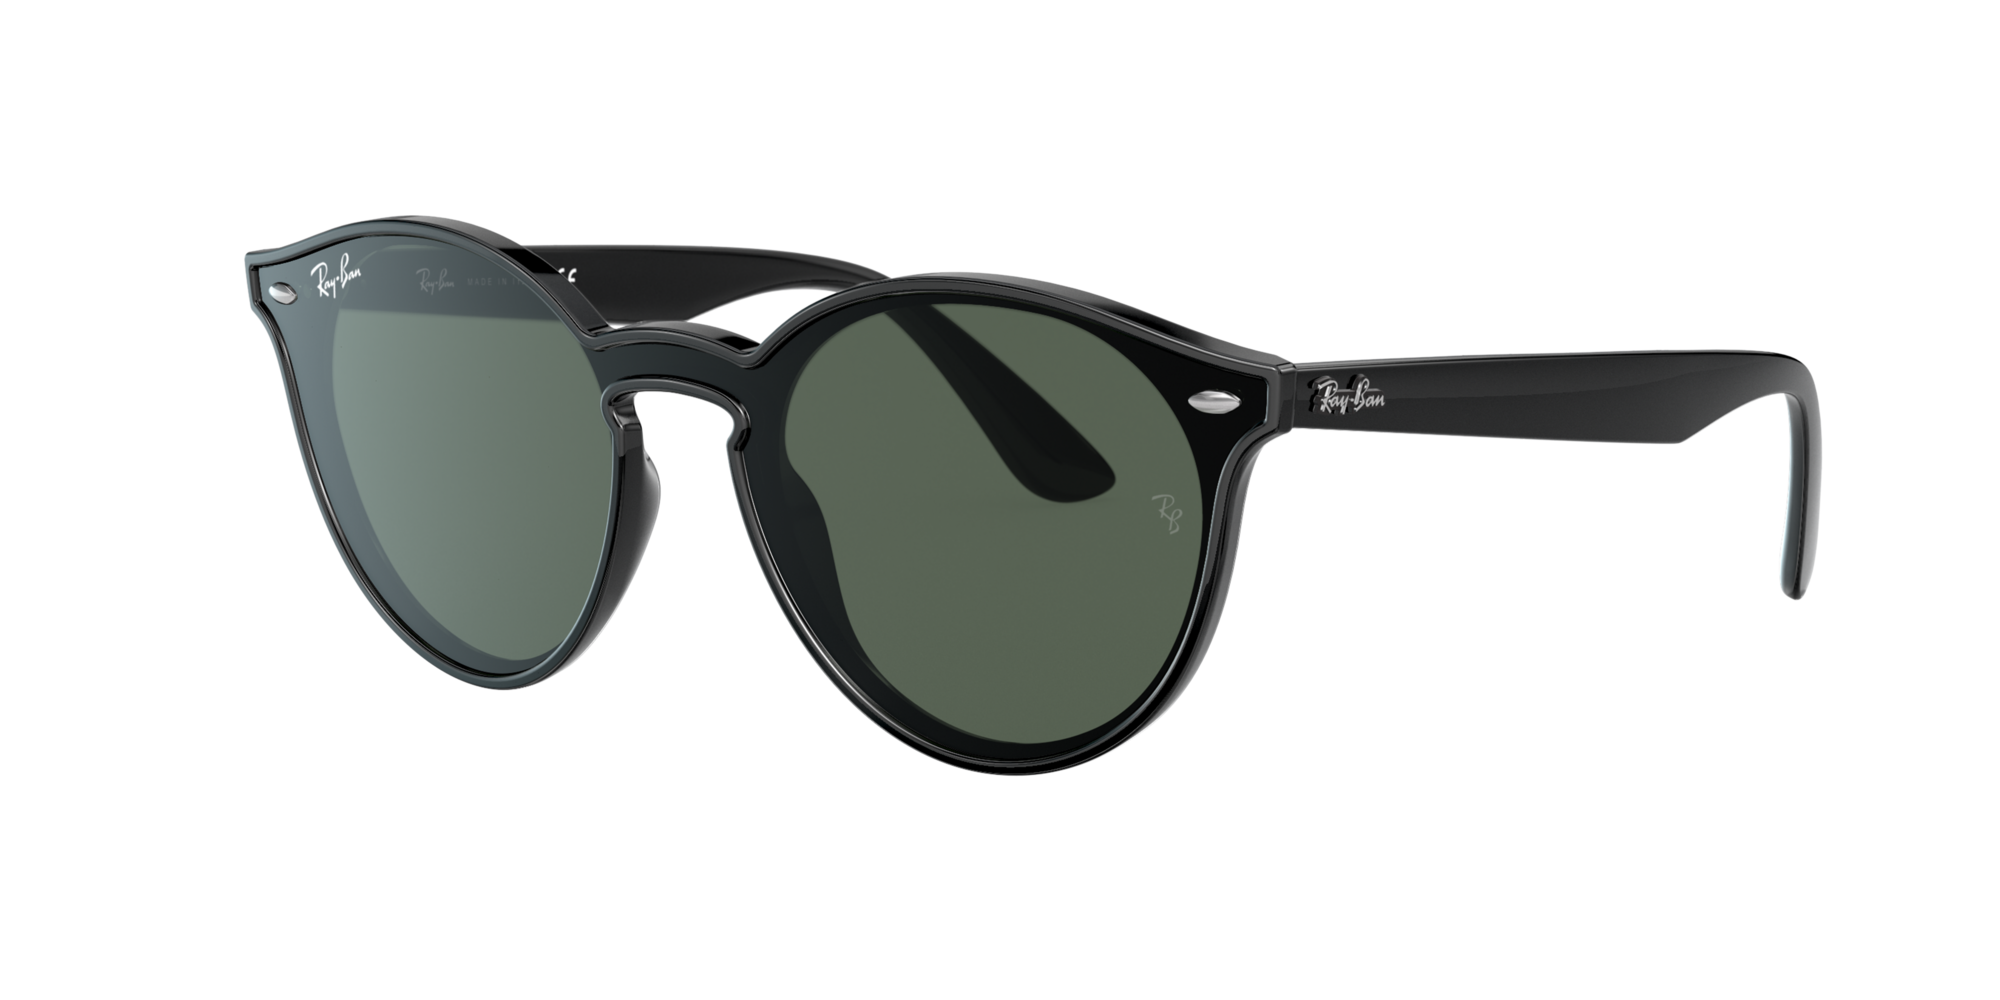 Jomashop.com Accessories Sunglasses Round Sunglasses Blaze Green Classic Round Unisex Sunglasses RB4380NF 601/71 39 